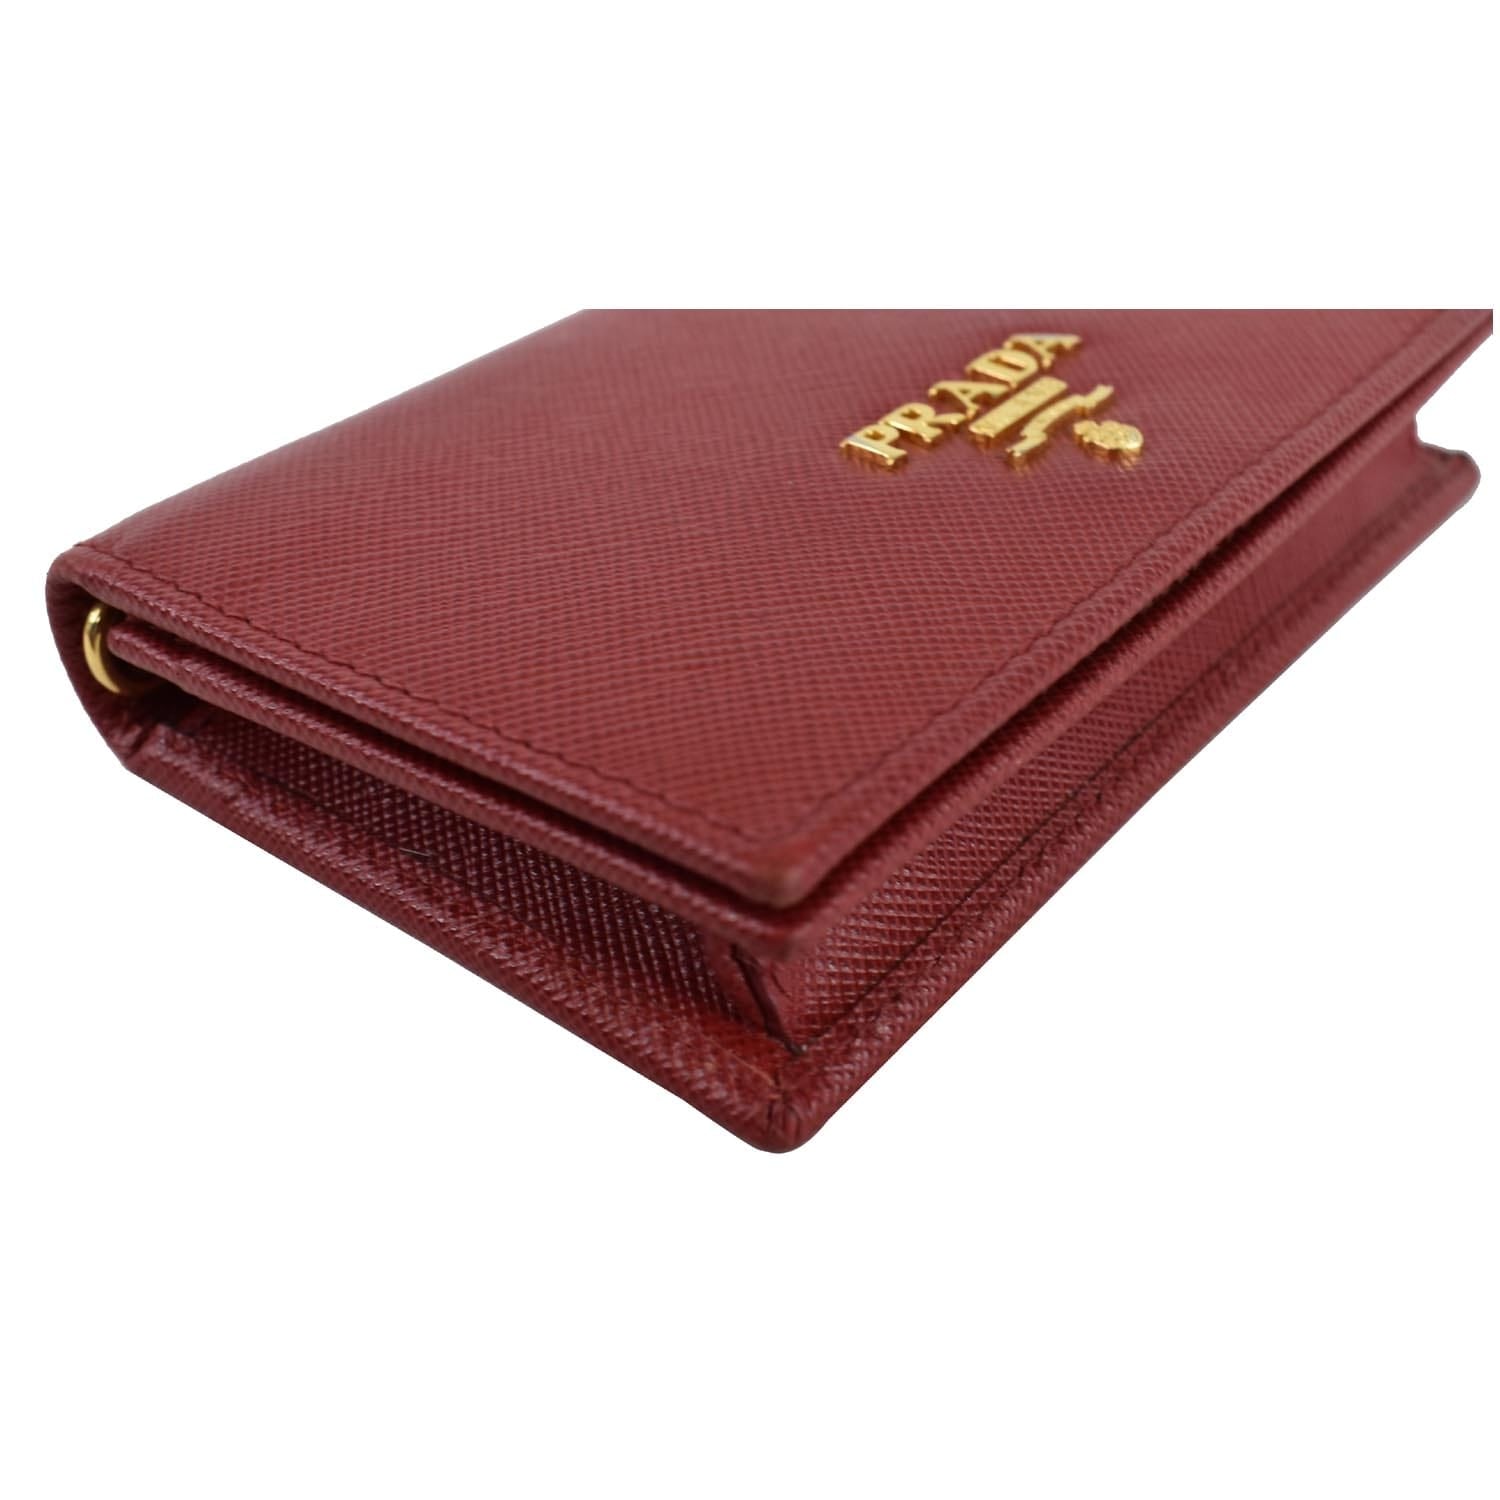 Prada Medium Saffiano Leather Wallet in Red